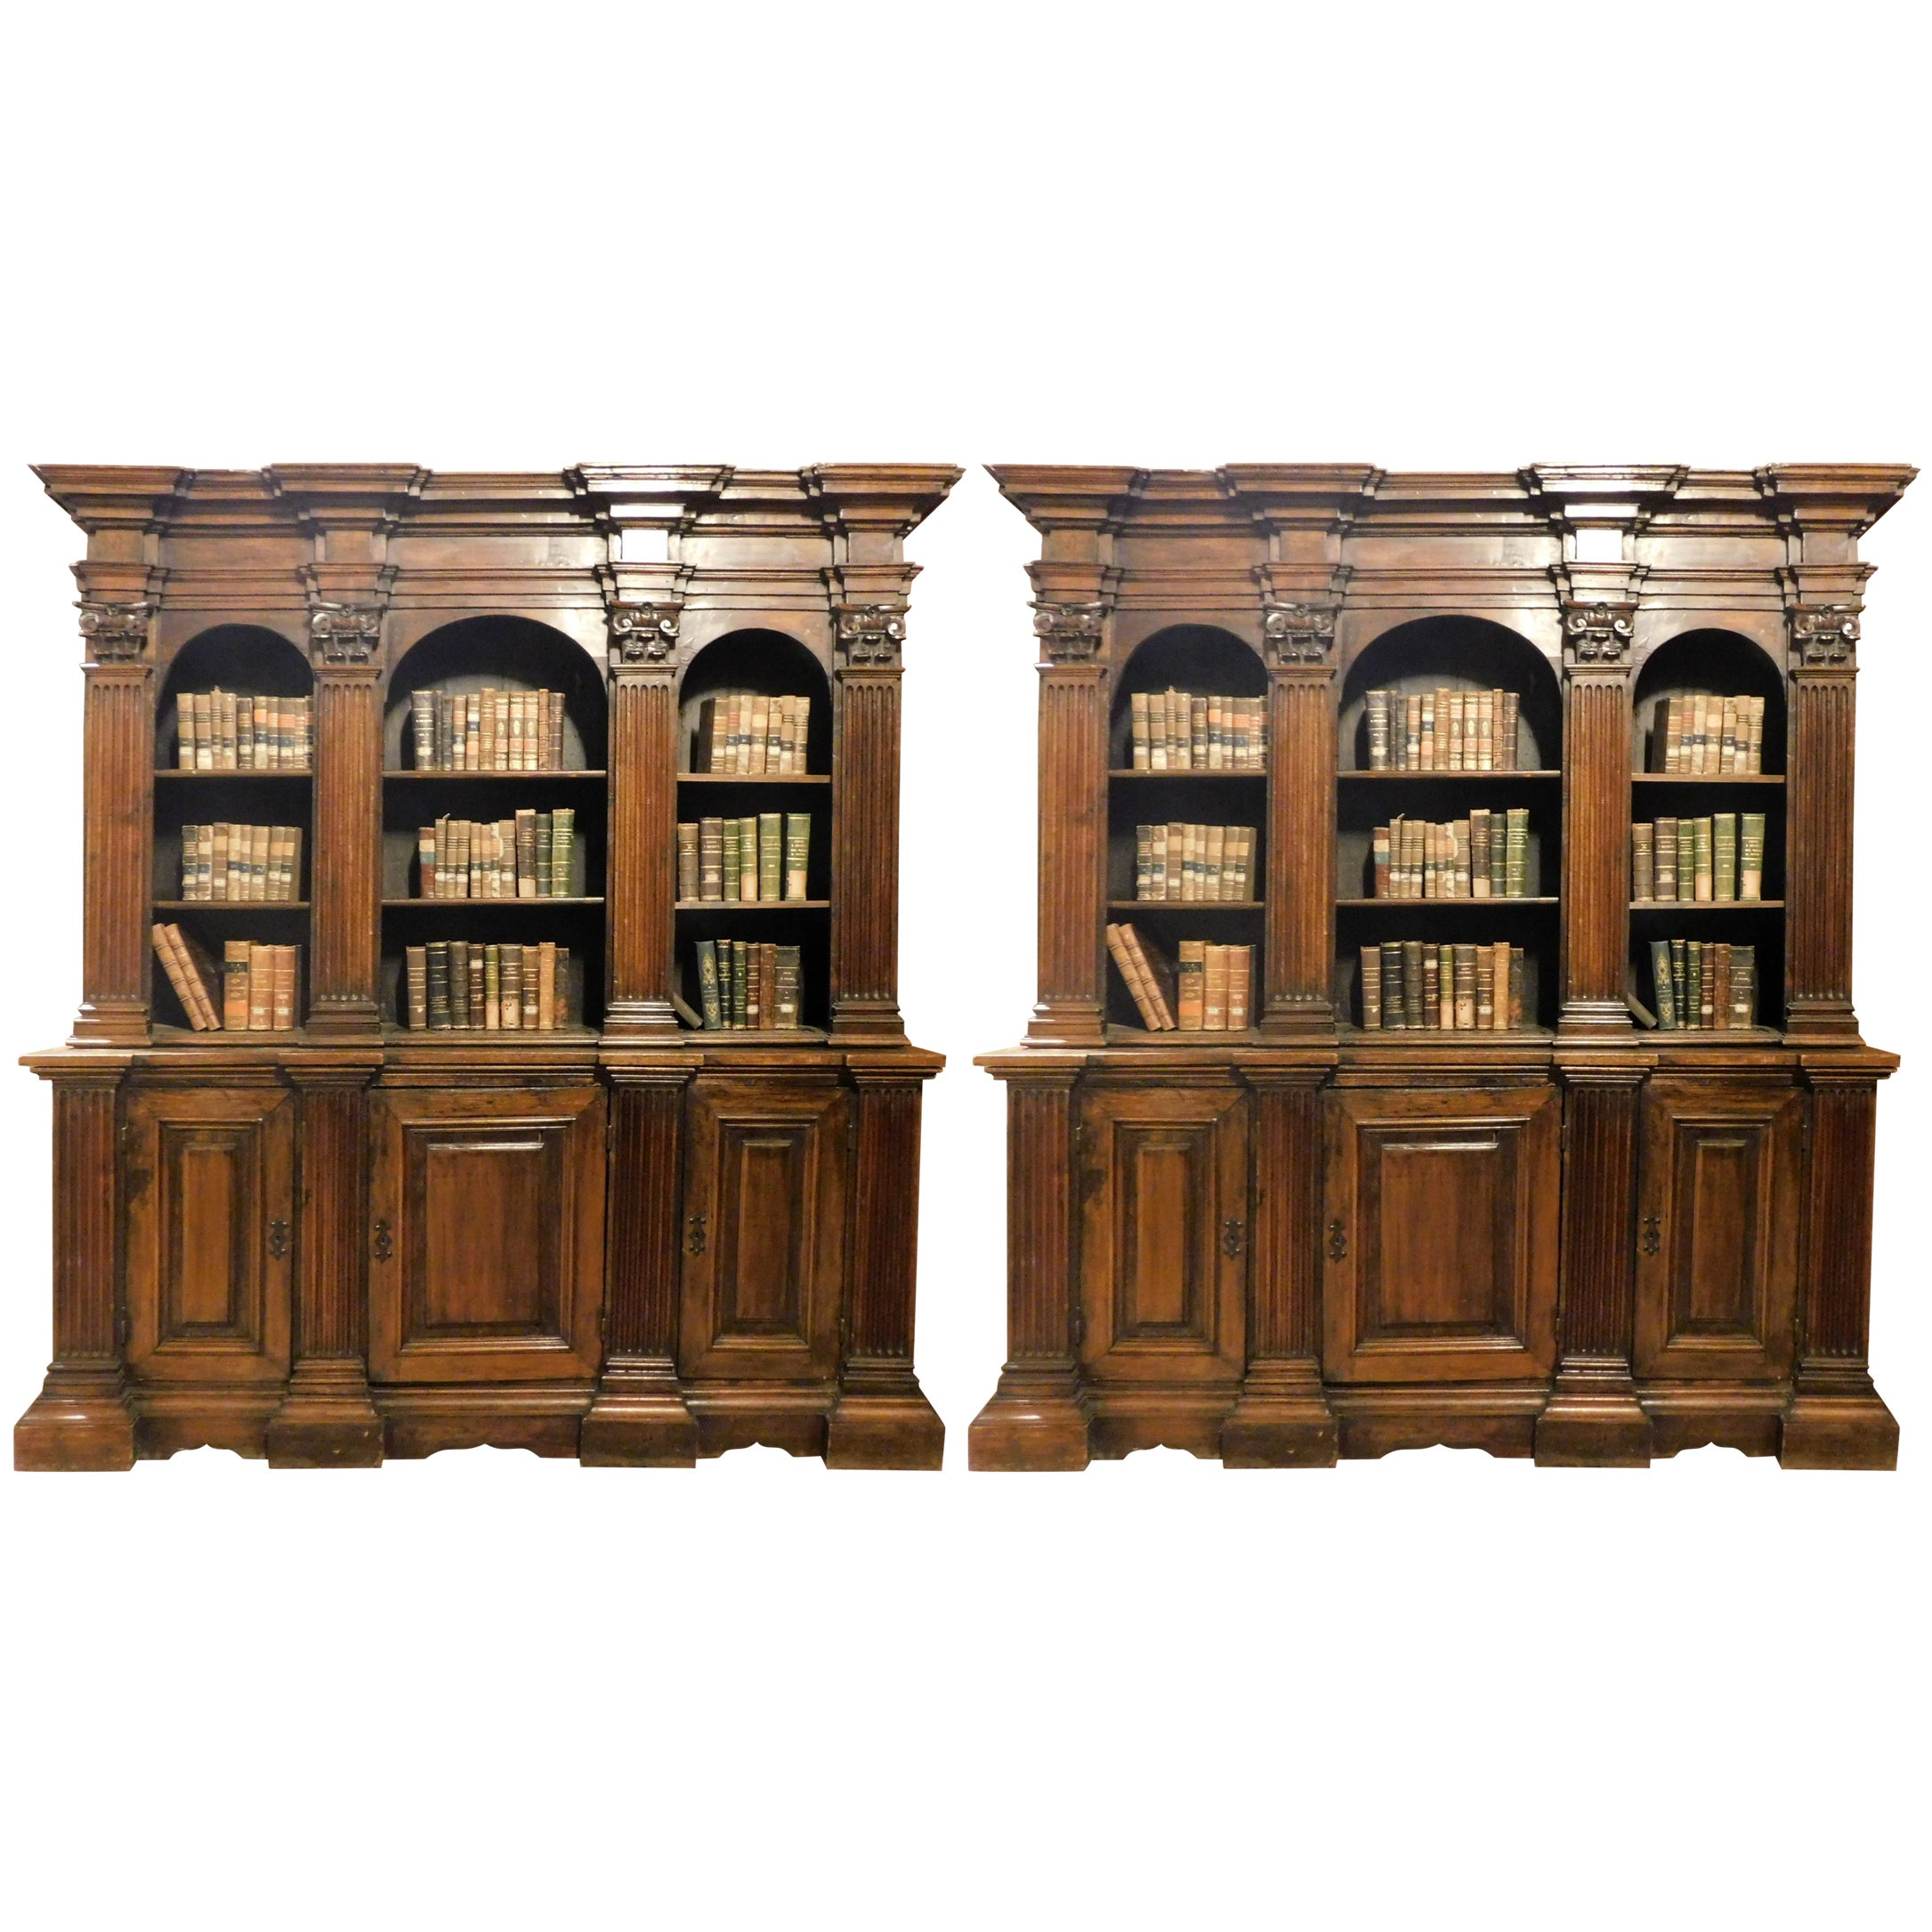 Antique Pair of Walnut Bookcases, 19th Century Italy